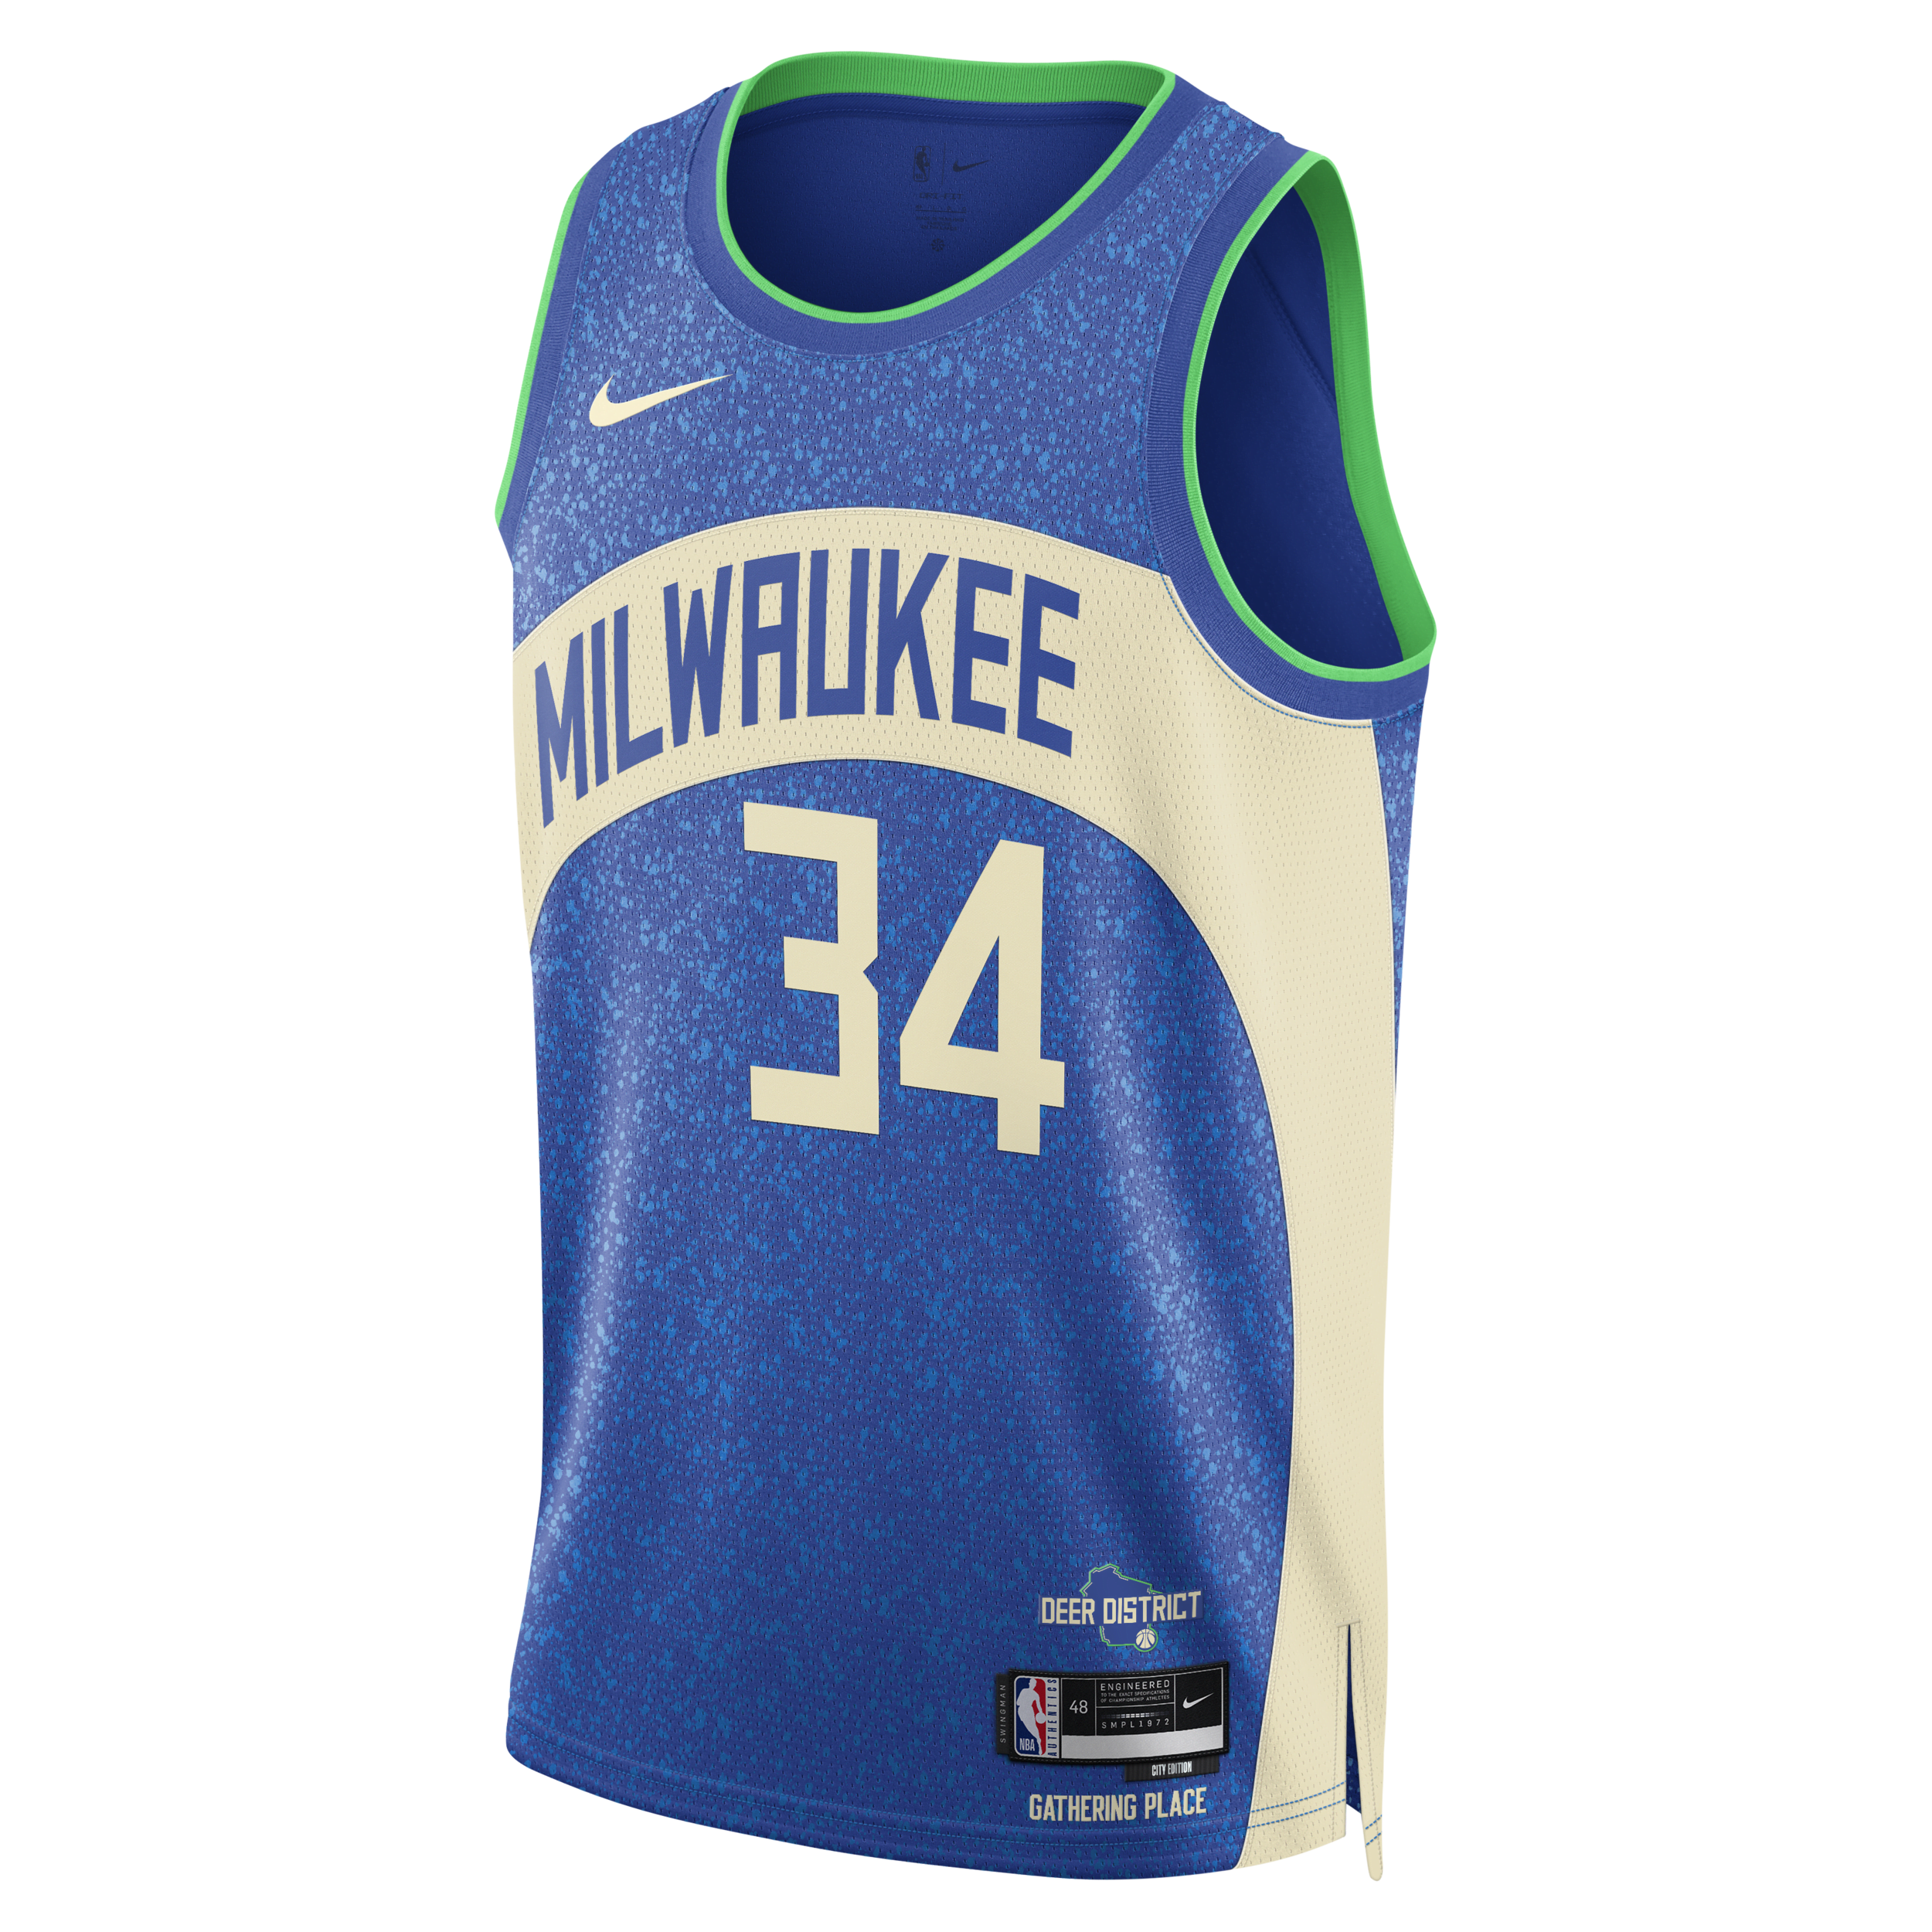 Maglia Giannis Antetokounmpo Milwaukee Bucks City Edition 2023/24 Swingman Nike Dri-FIT NBA – Uomo - Blu